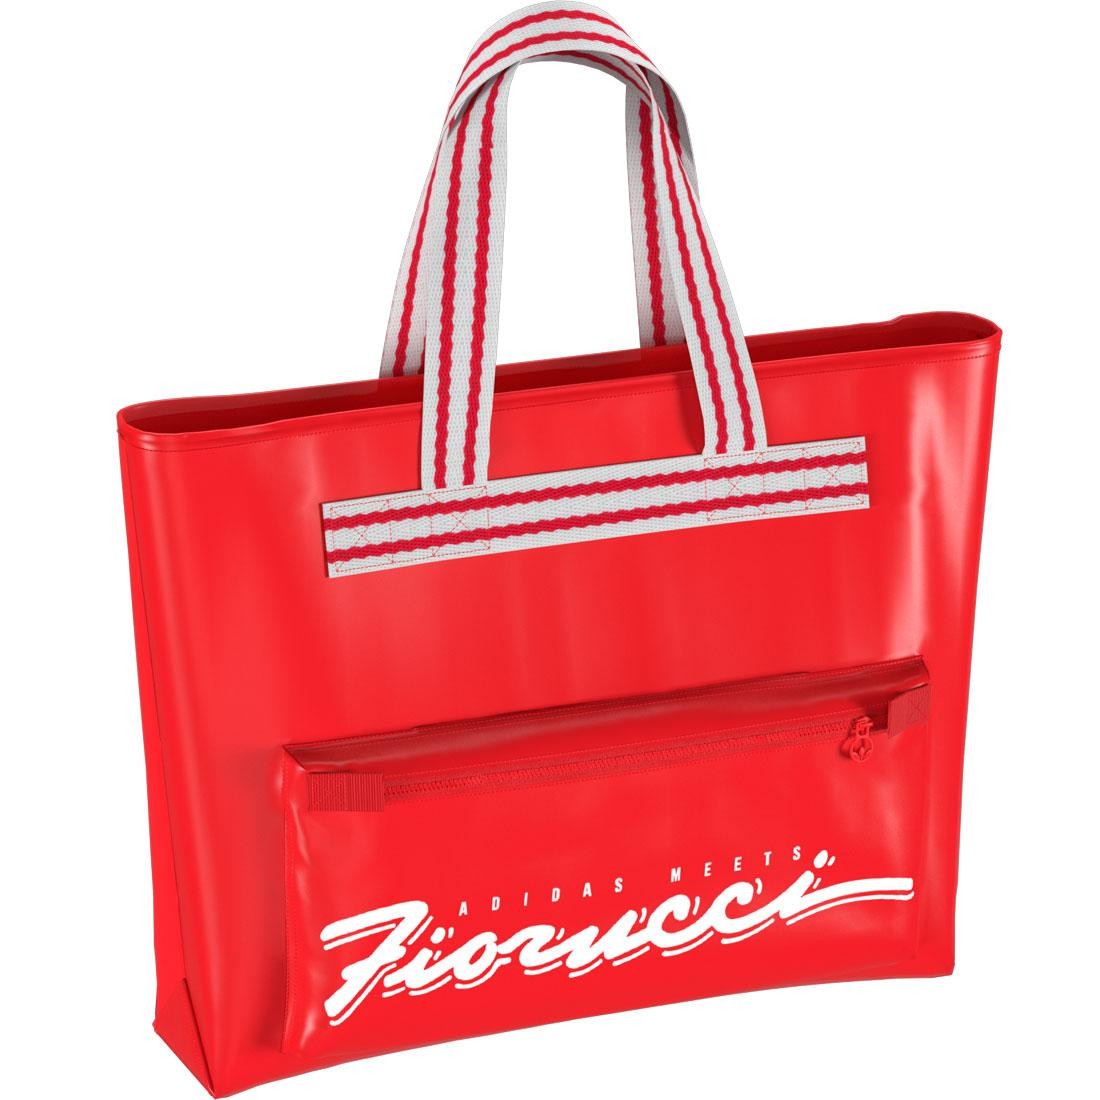 Adidas x Fiorucci Stripe Tote Bag red